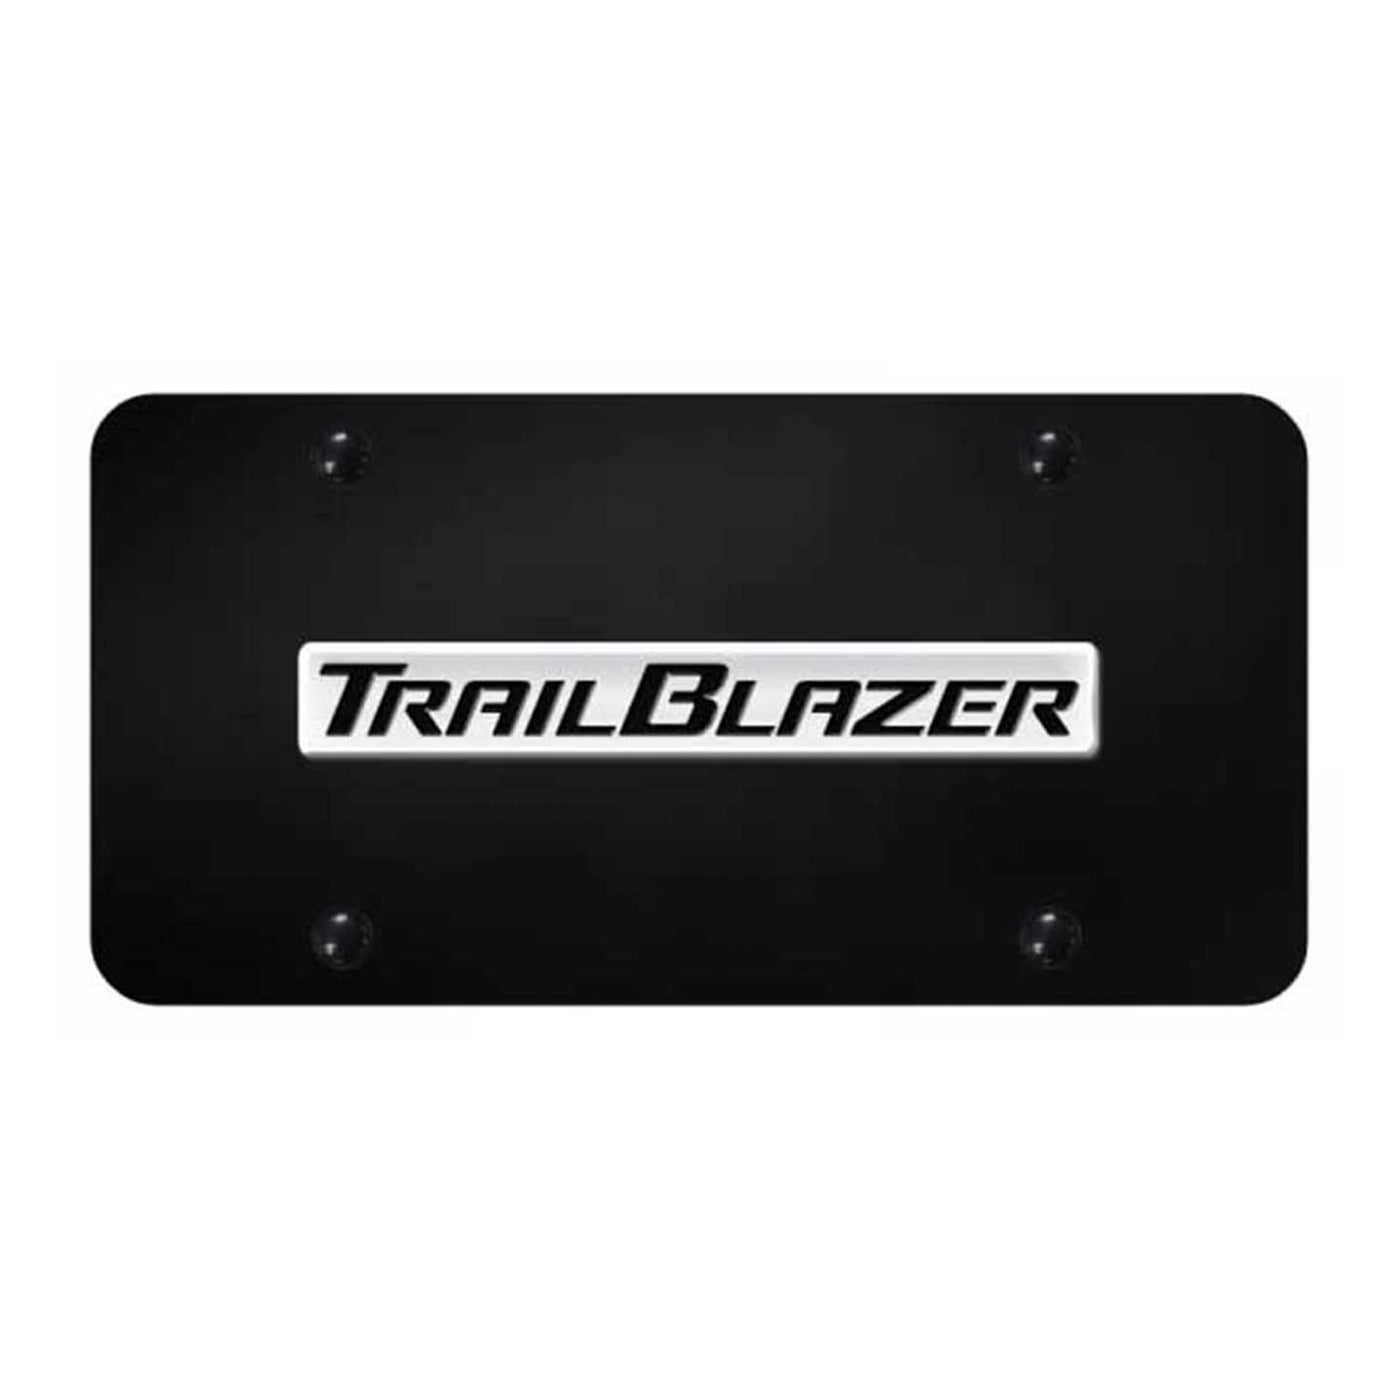 Trailblazer Name License Plate - Chrome on Black